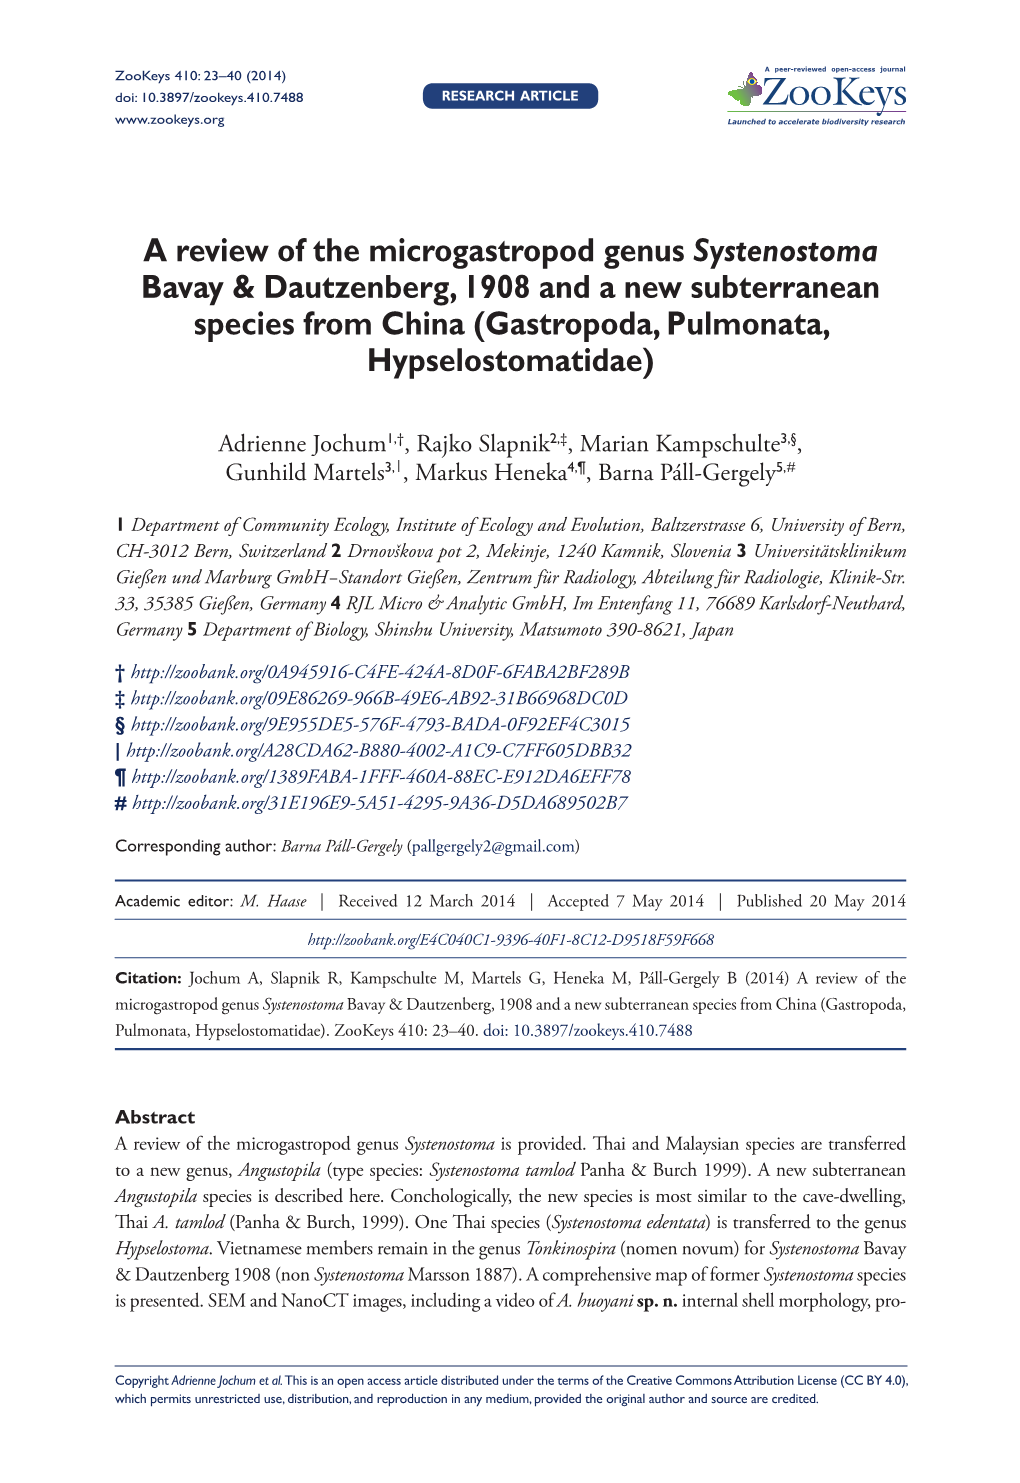 A Review of the Microgastropod Genus Systenostoma Bavay & Dautzenberg, 1908 and a New Subterranean Species from China (Gastropoda, Pulmonata, Hypselostomatidae)